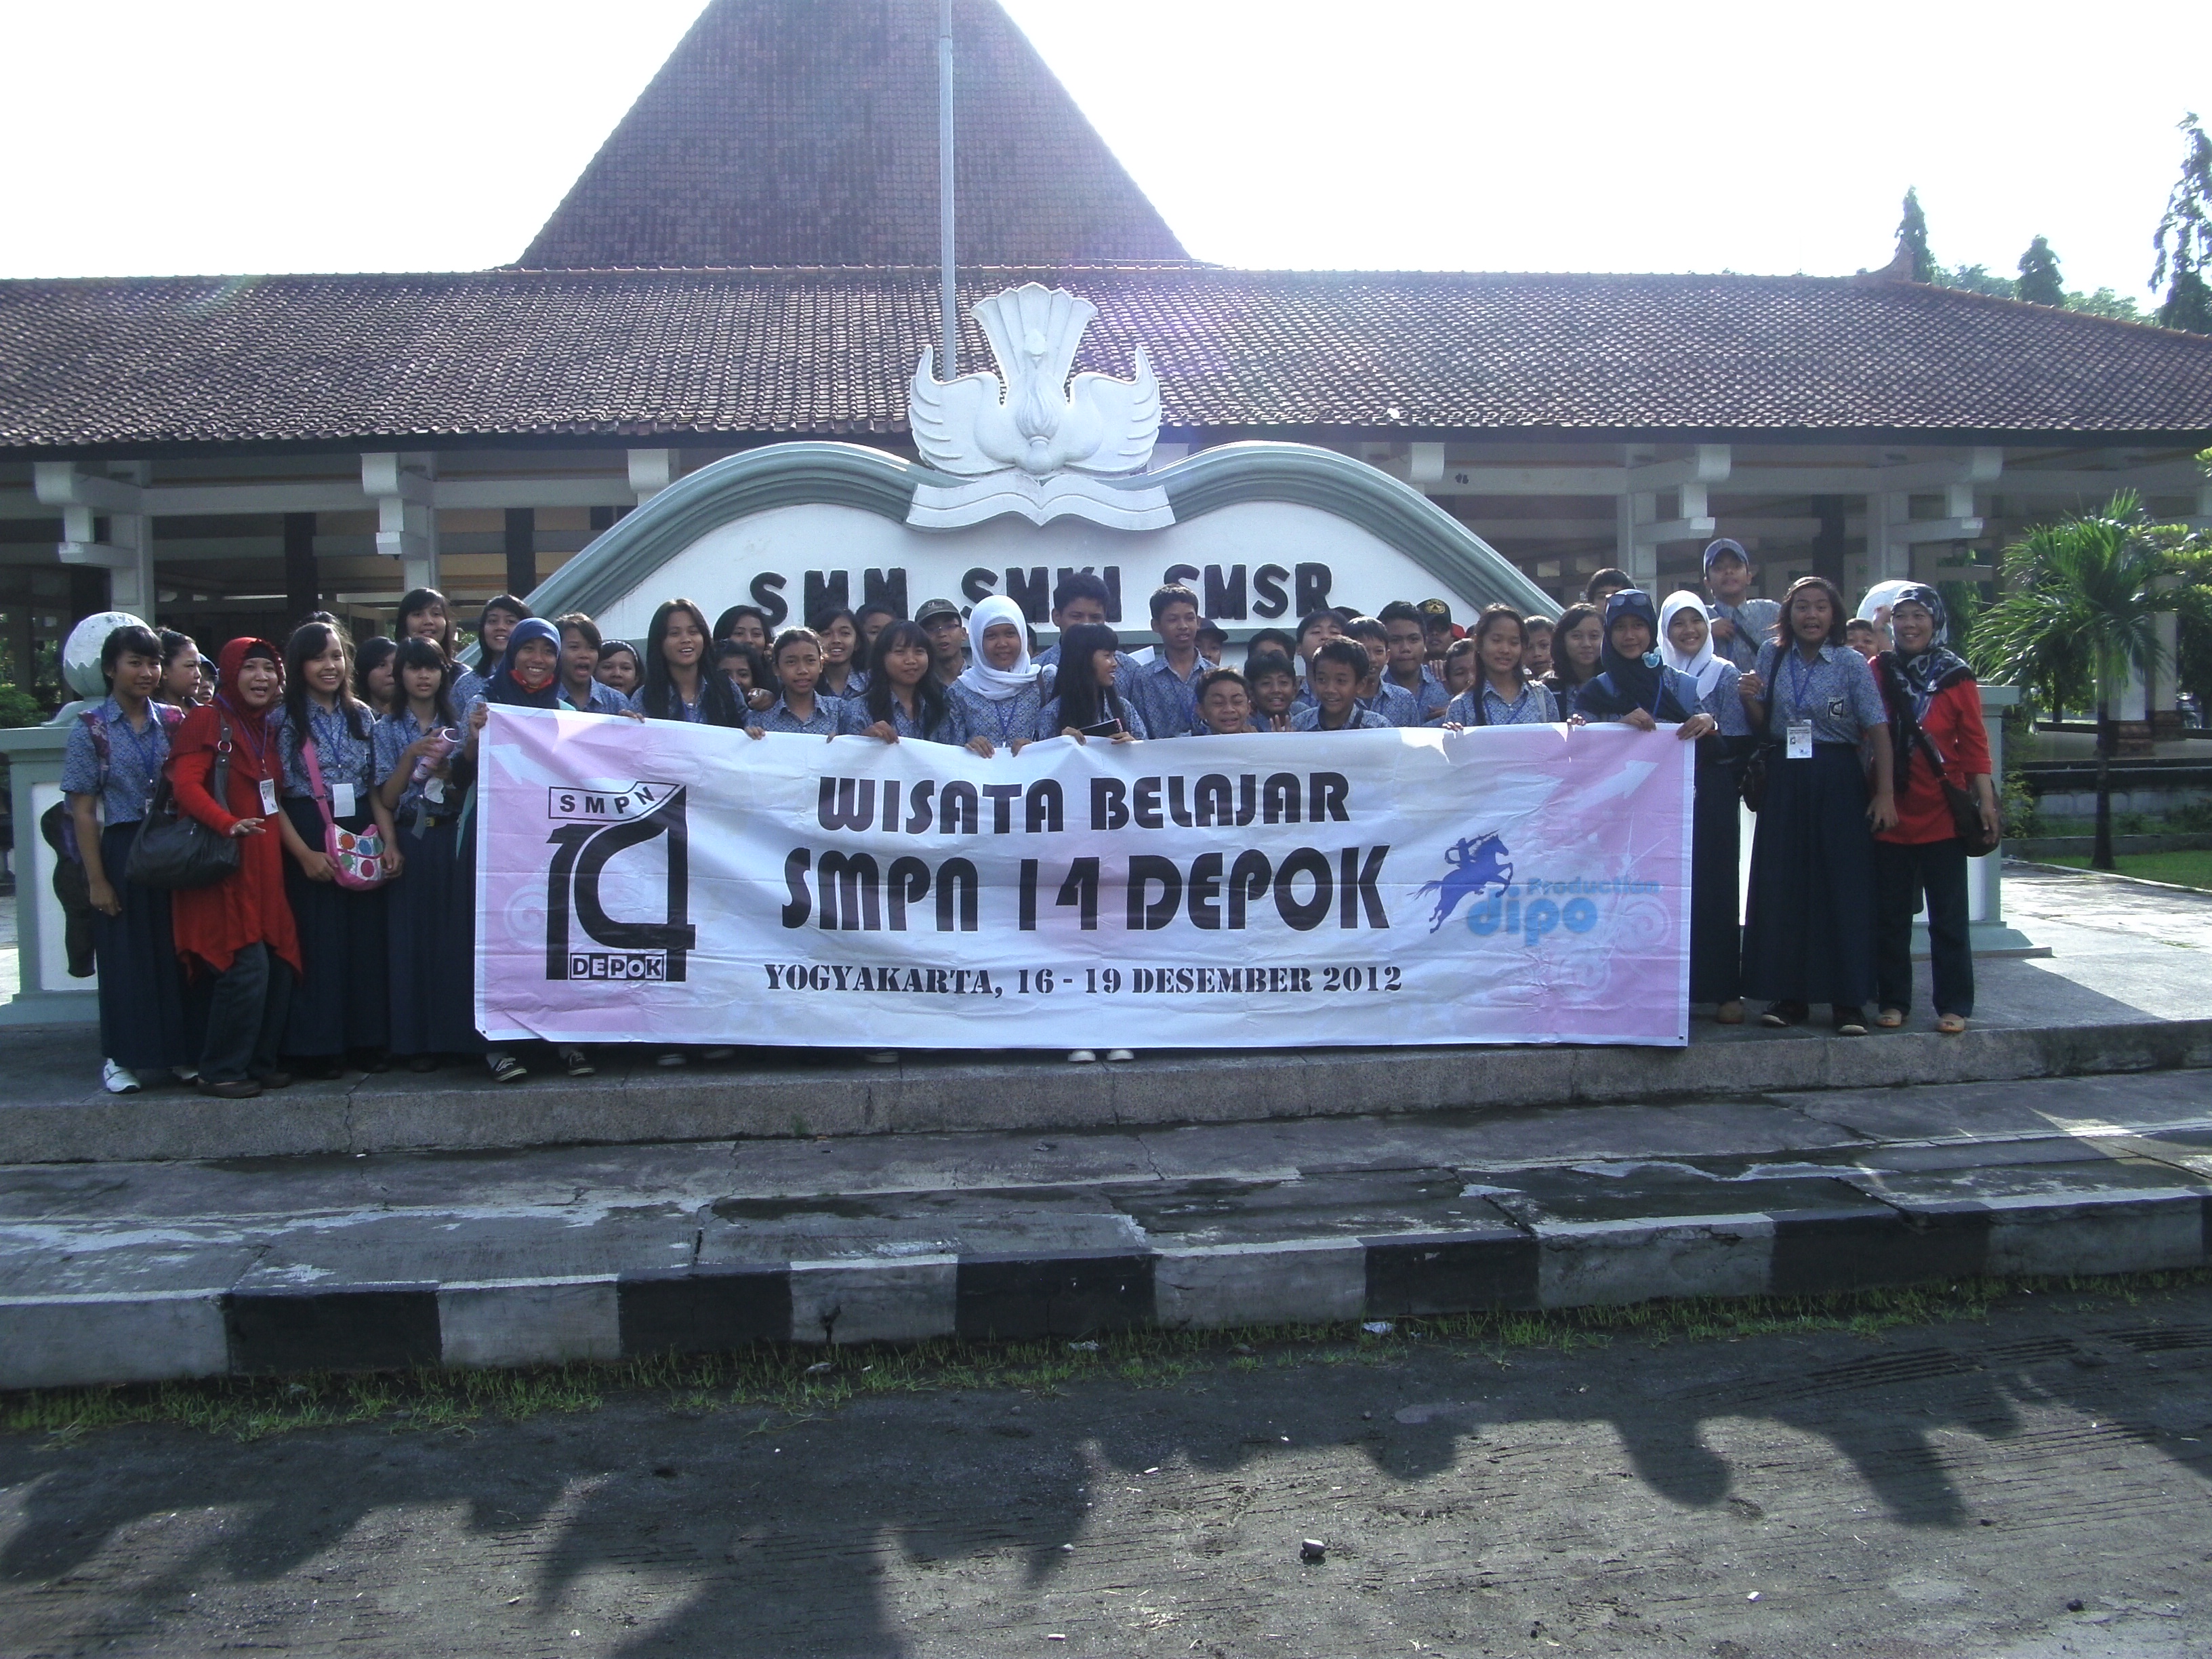 Pada tanggal 16 – 19 Desember 2012 SMPN 14 Depok telah mengadakan kegiatan Wisata Belajar Jogyakarta 2012 Kegiatan ini merupakan kegiatan rutin tahunan